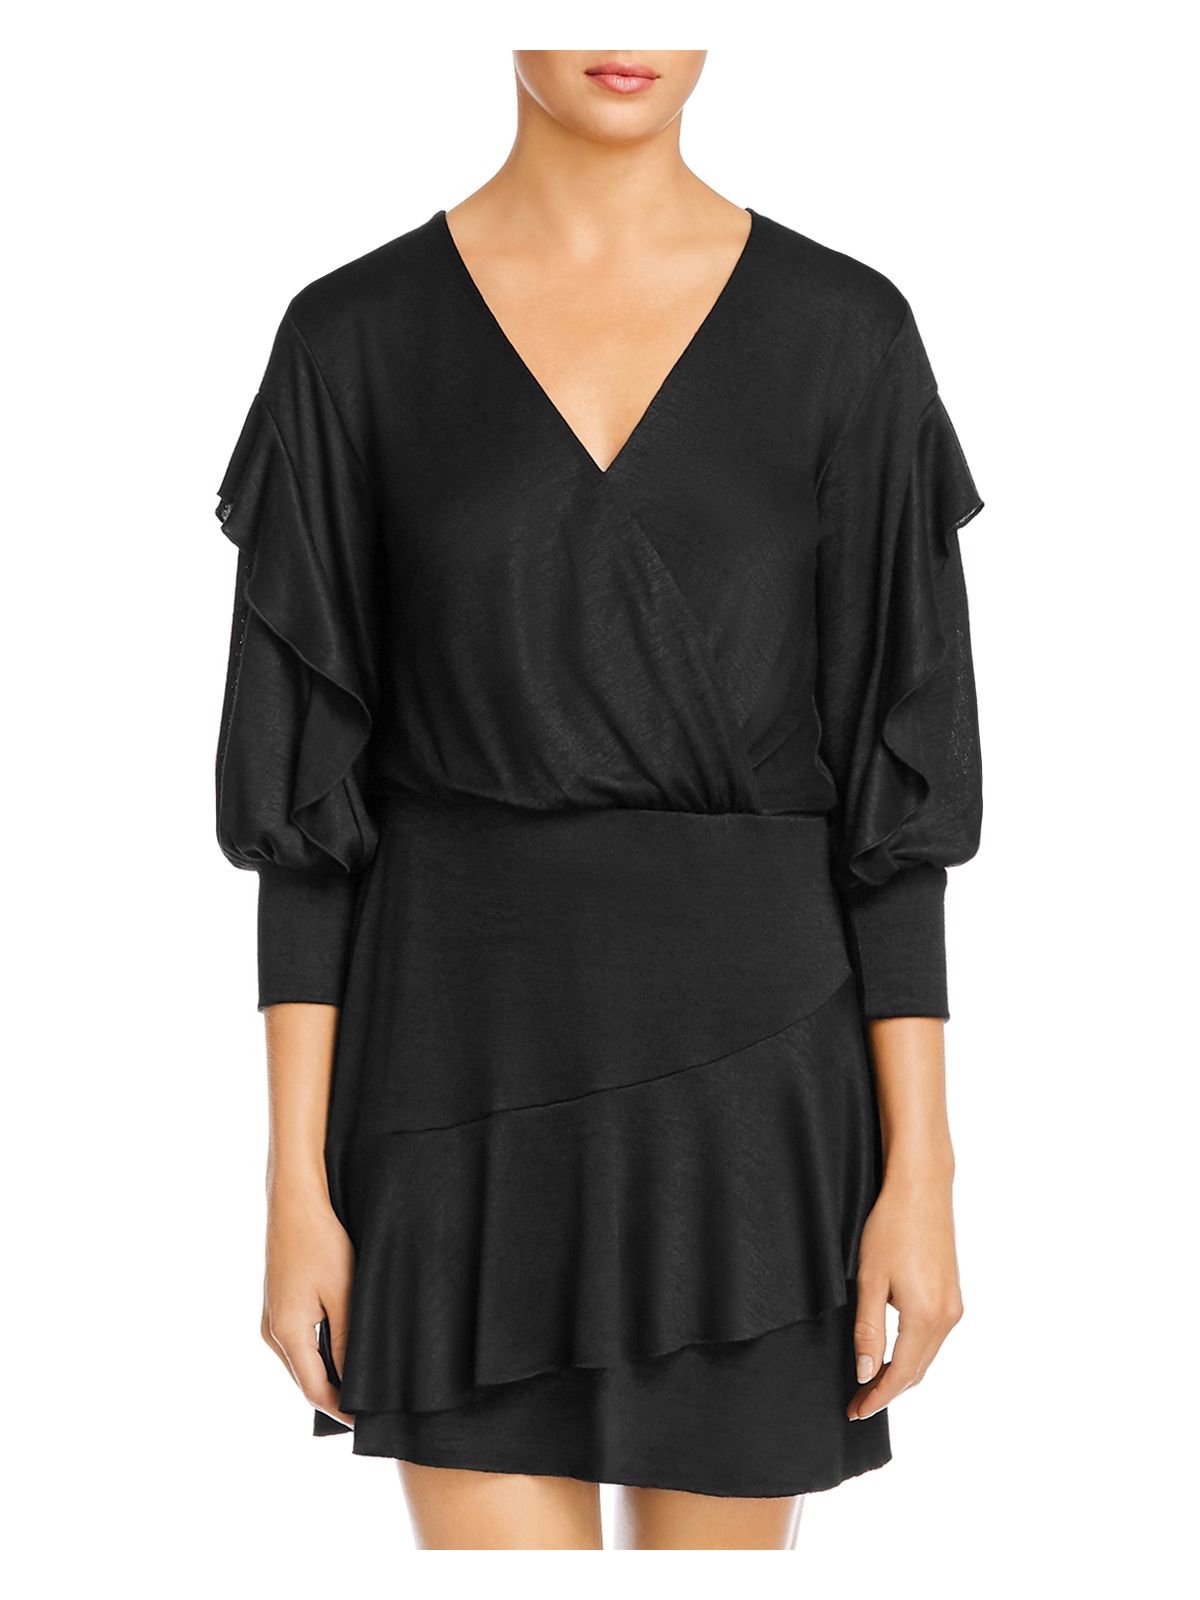 BAILEY44 Womens Black 3/4 Sleeve V Neck Mini Evening Sheath Dress S